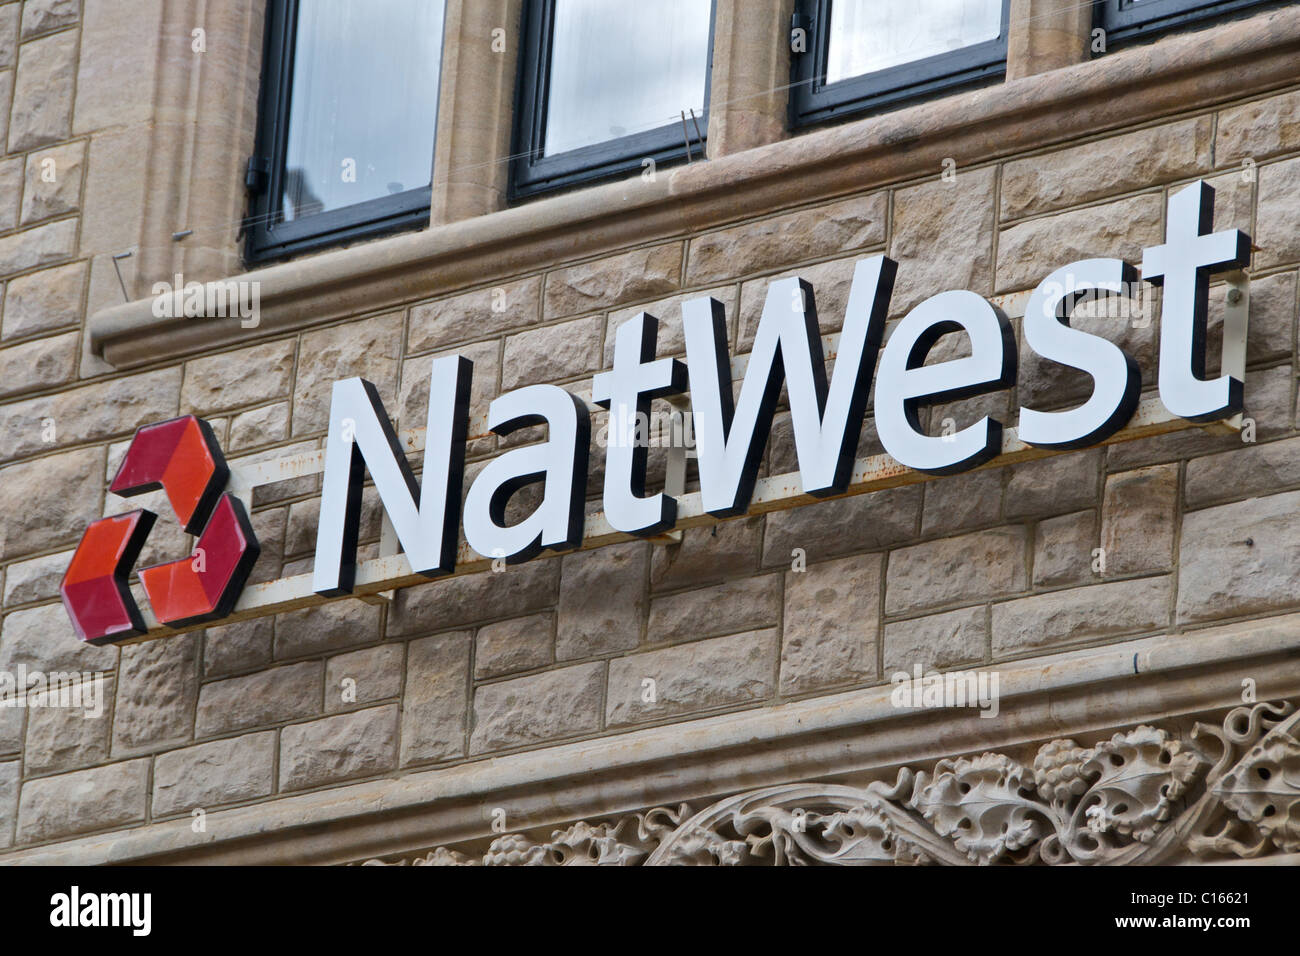 NatWest Nat West National Westminster Bank logo name Stock Photo